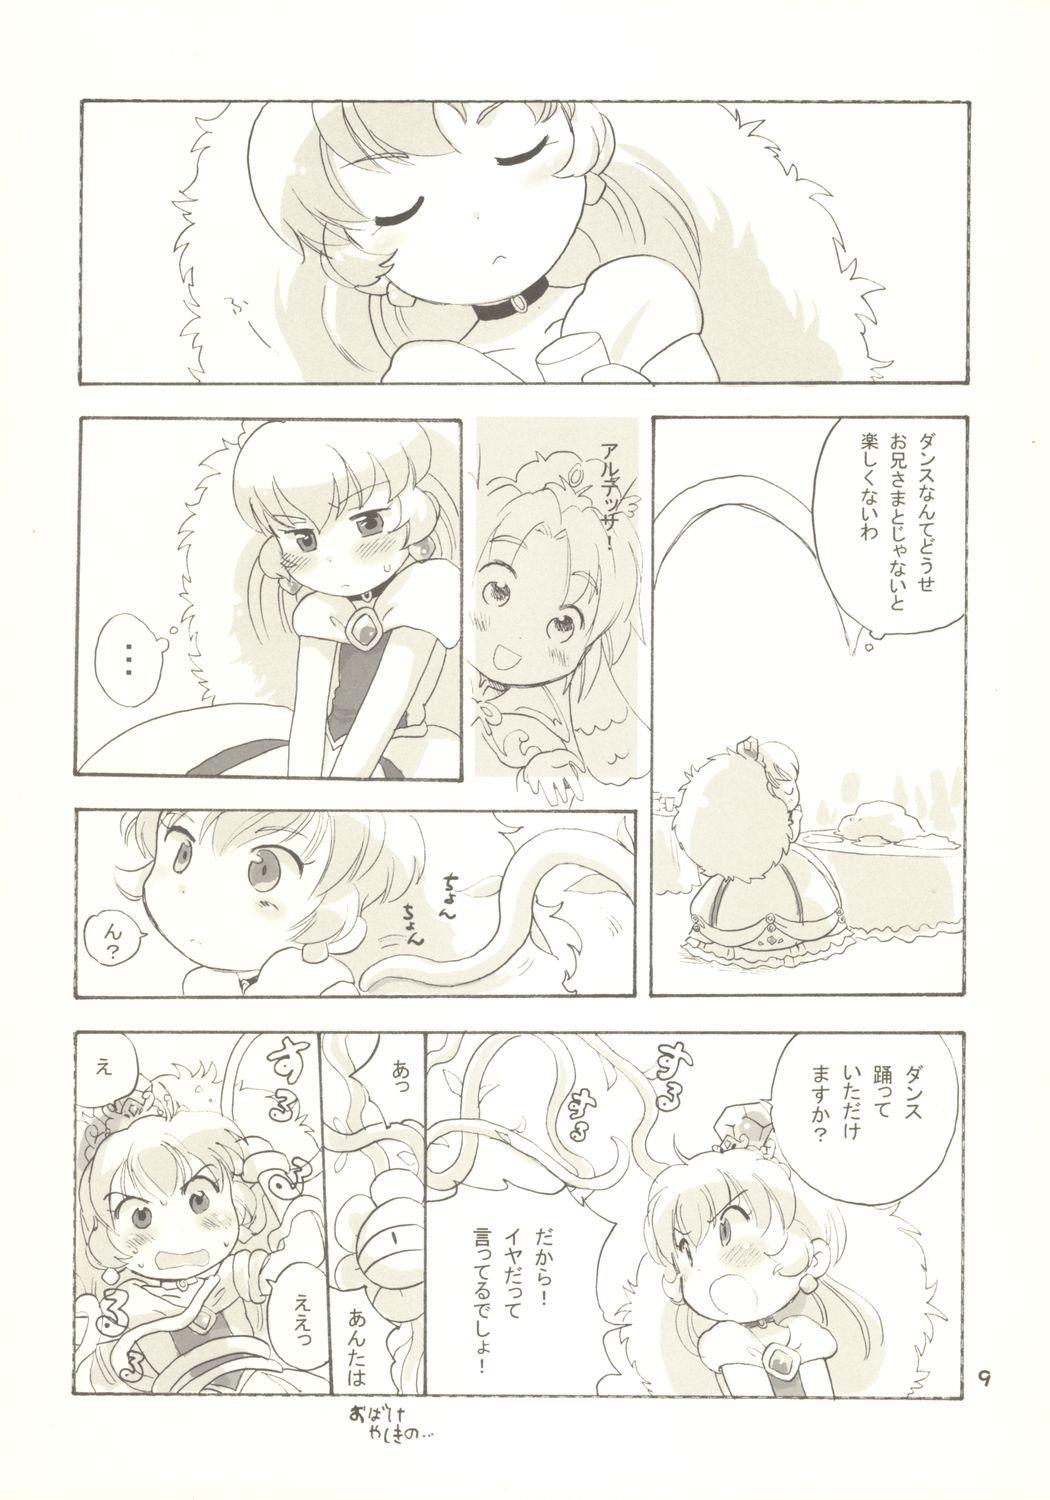 Sister Egao ni Nare - Please give me smiling face - Fushigiboshi no futagohime Cameltoe - Page 8